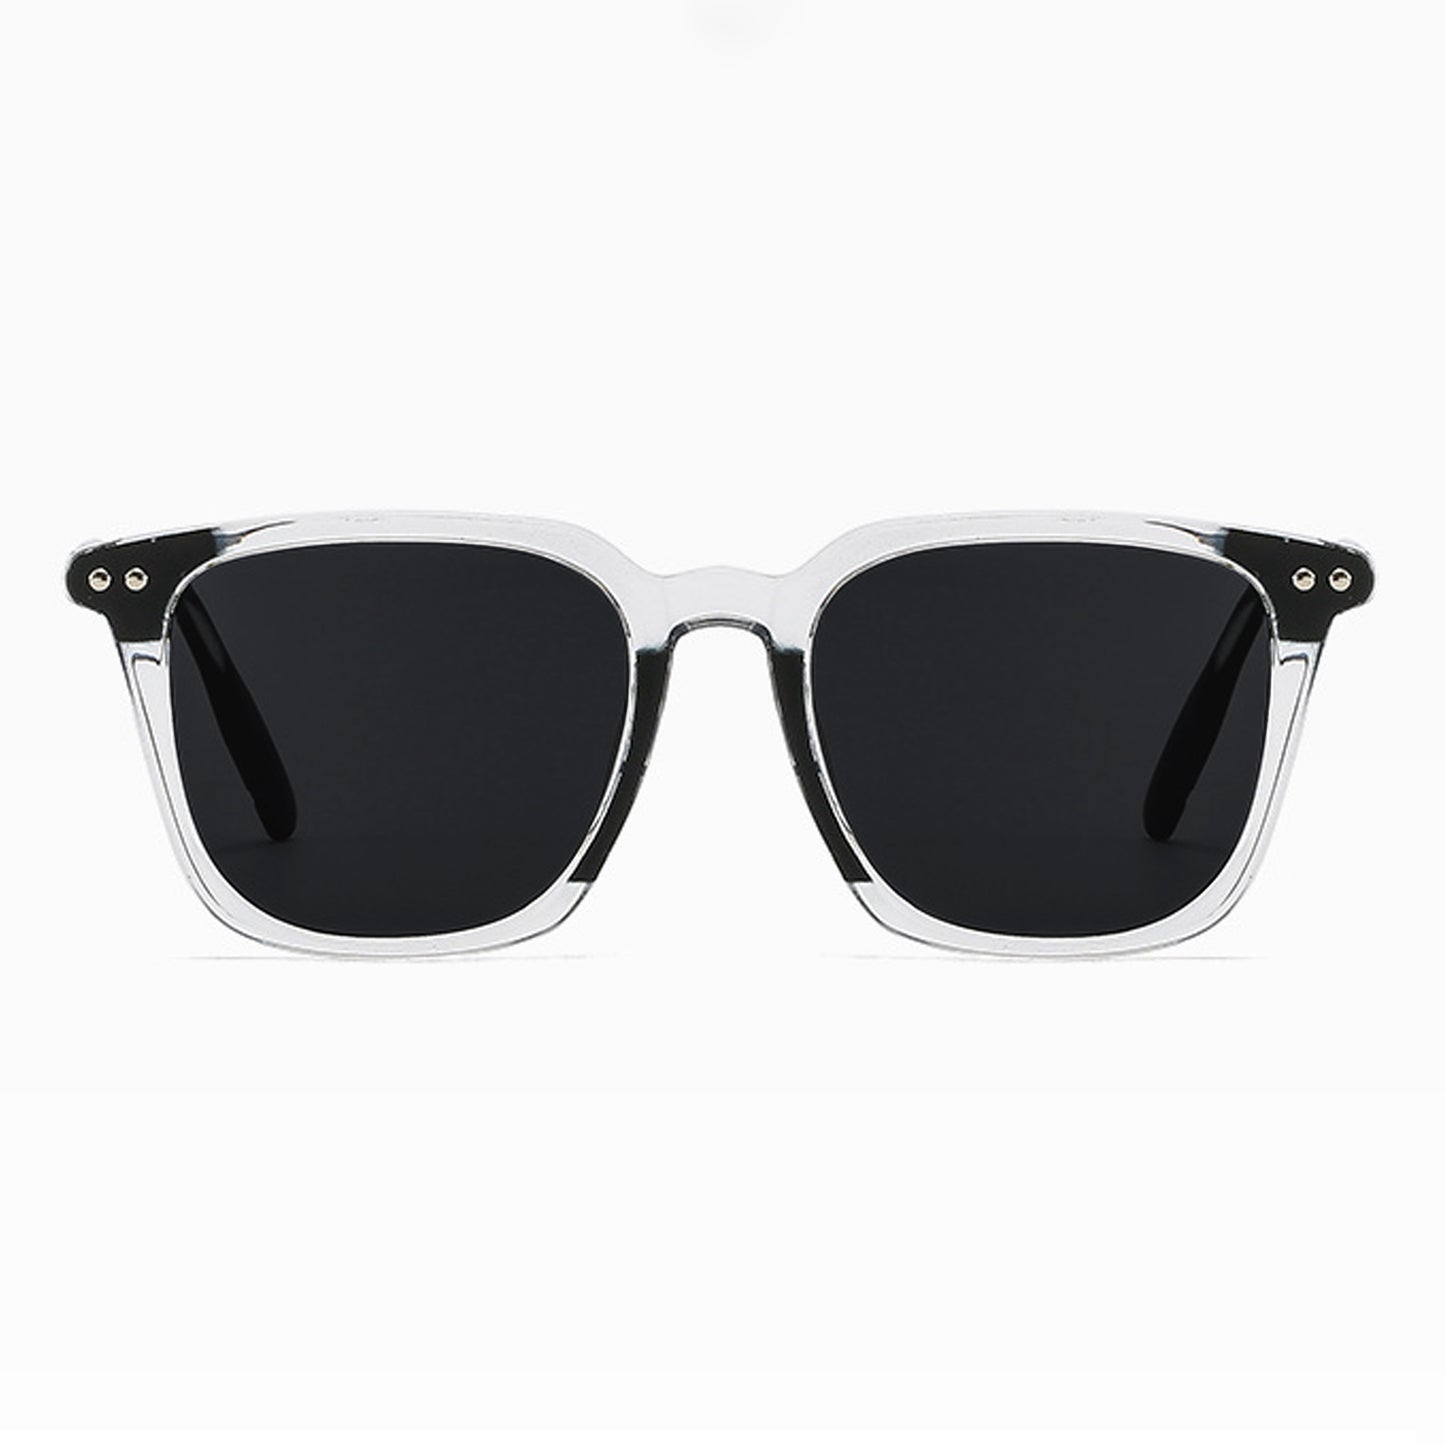 Helixer Exclusive Edition Unisex Sunglasses